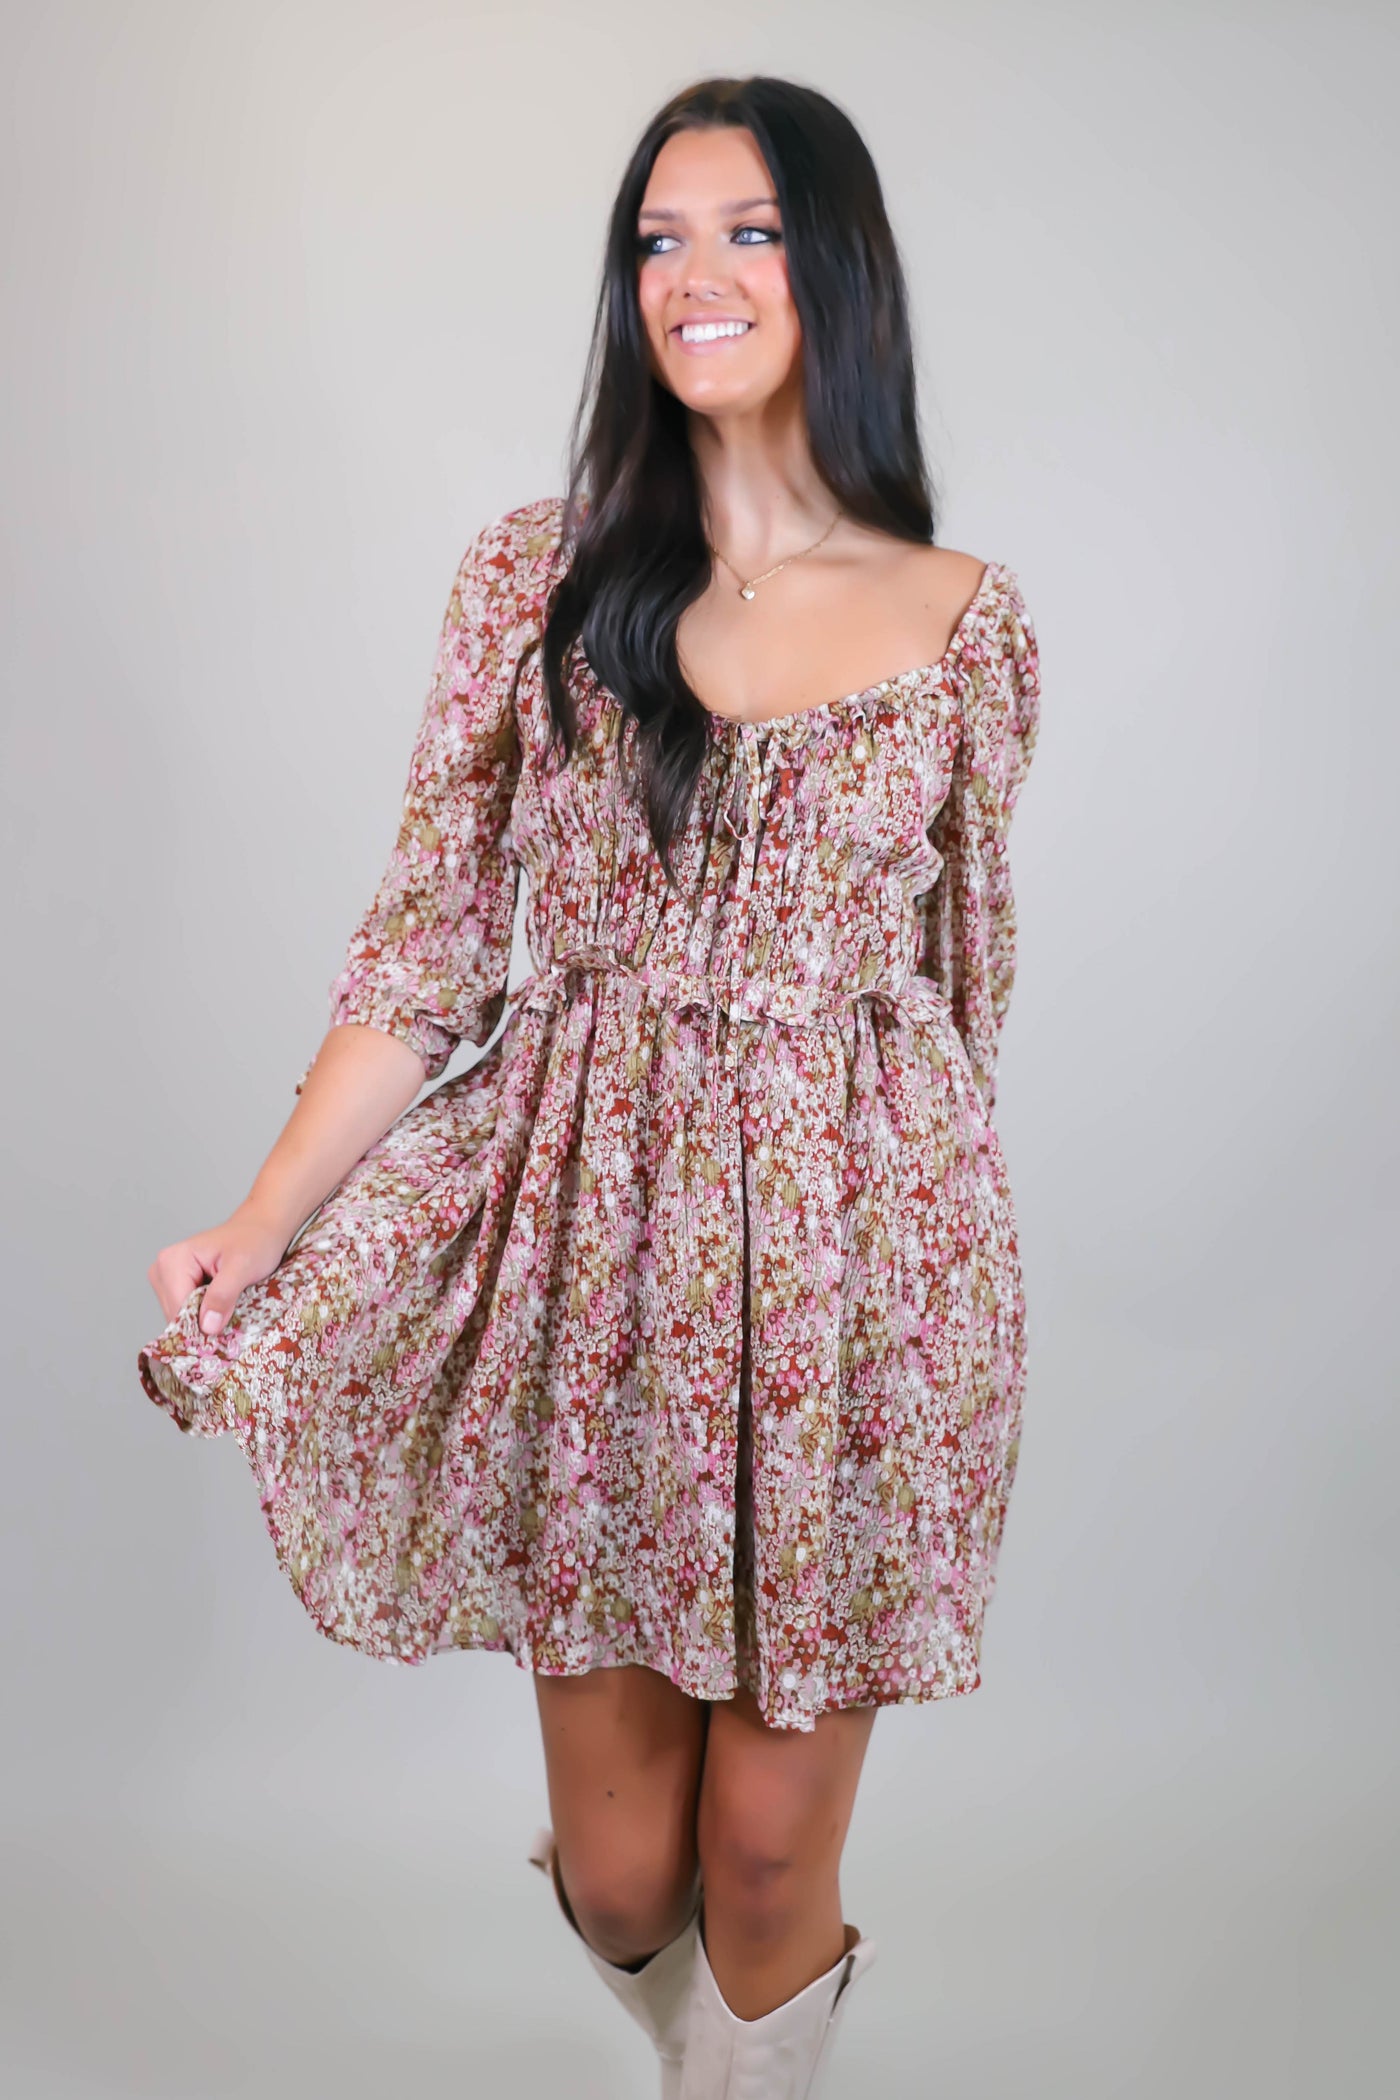 Dainty Floral Print Dress- Women's Ruffle Dress- Sweetheart Neckline Dress